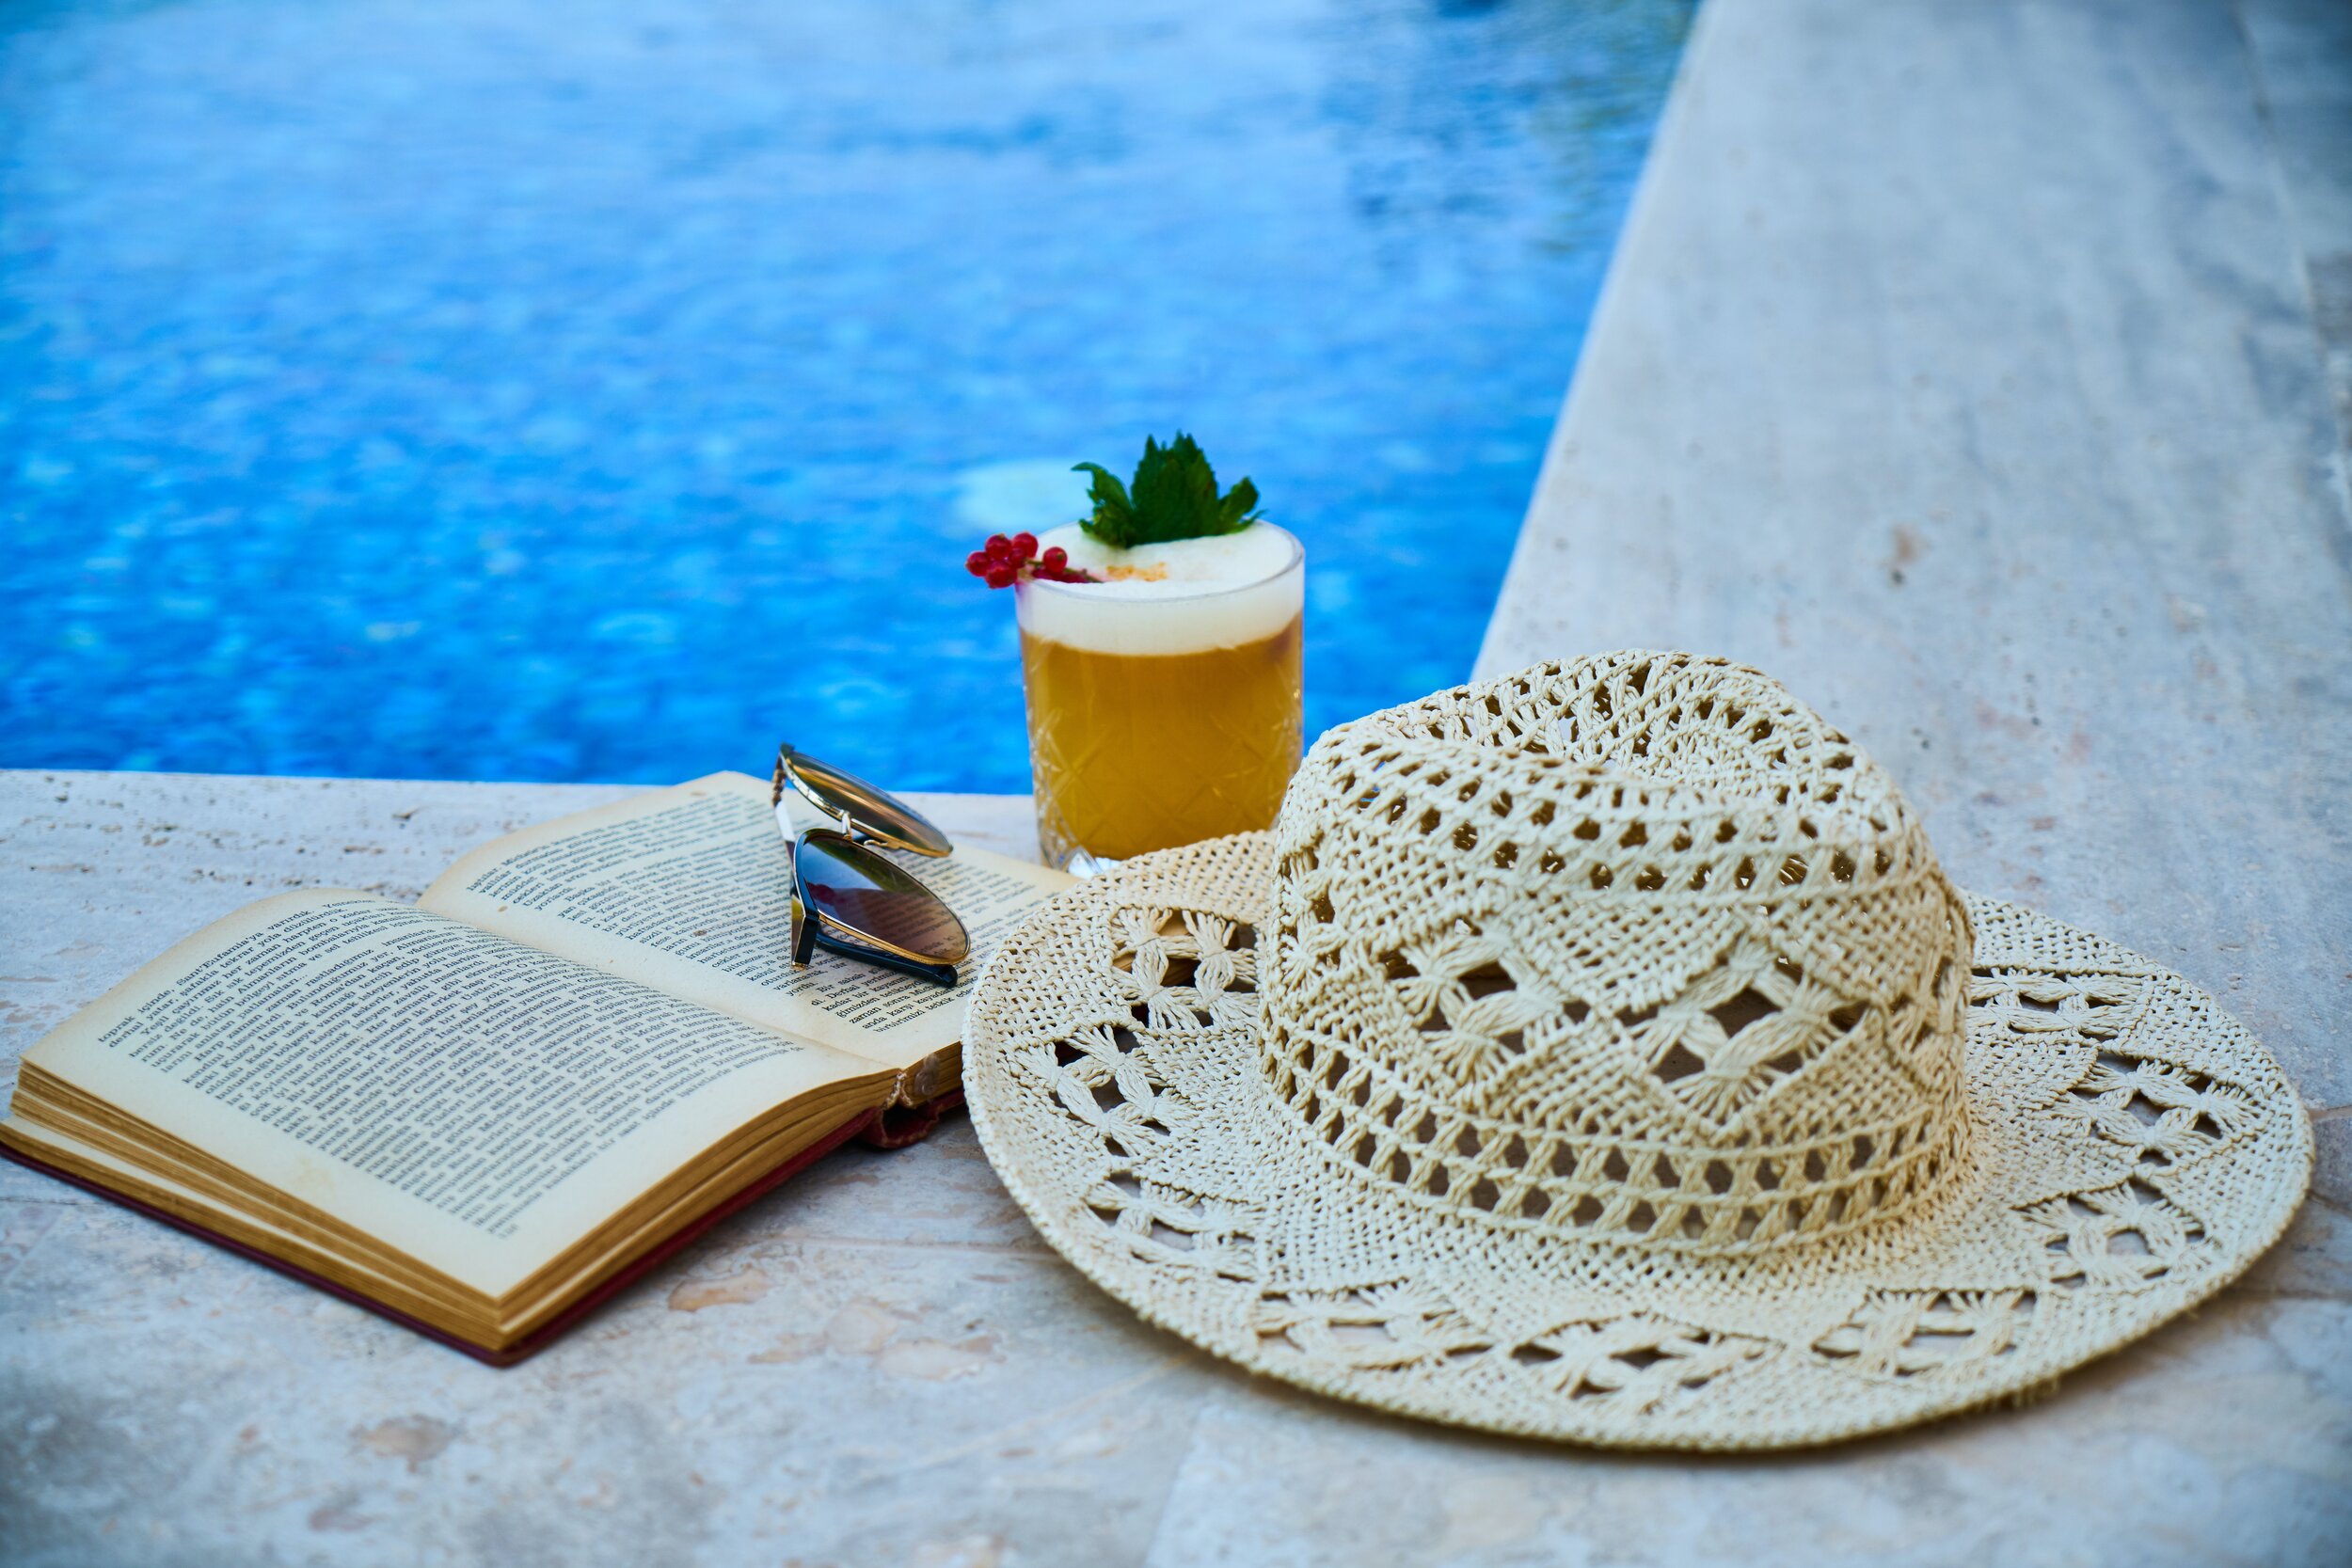 beige-straw-hat-book-sunglasses-and-drink-beside-pool-3019008.jpg